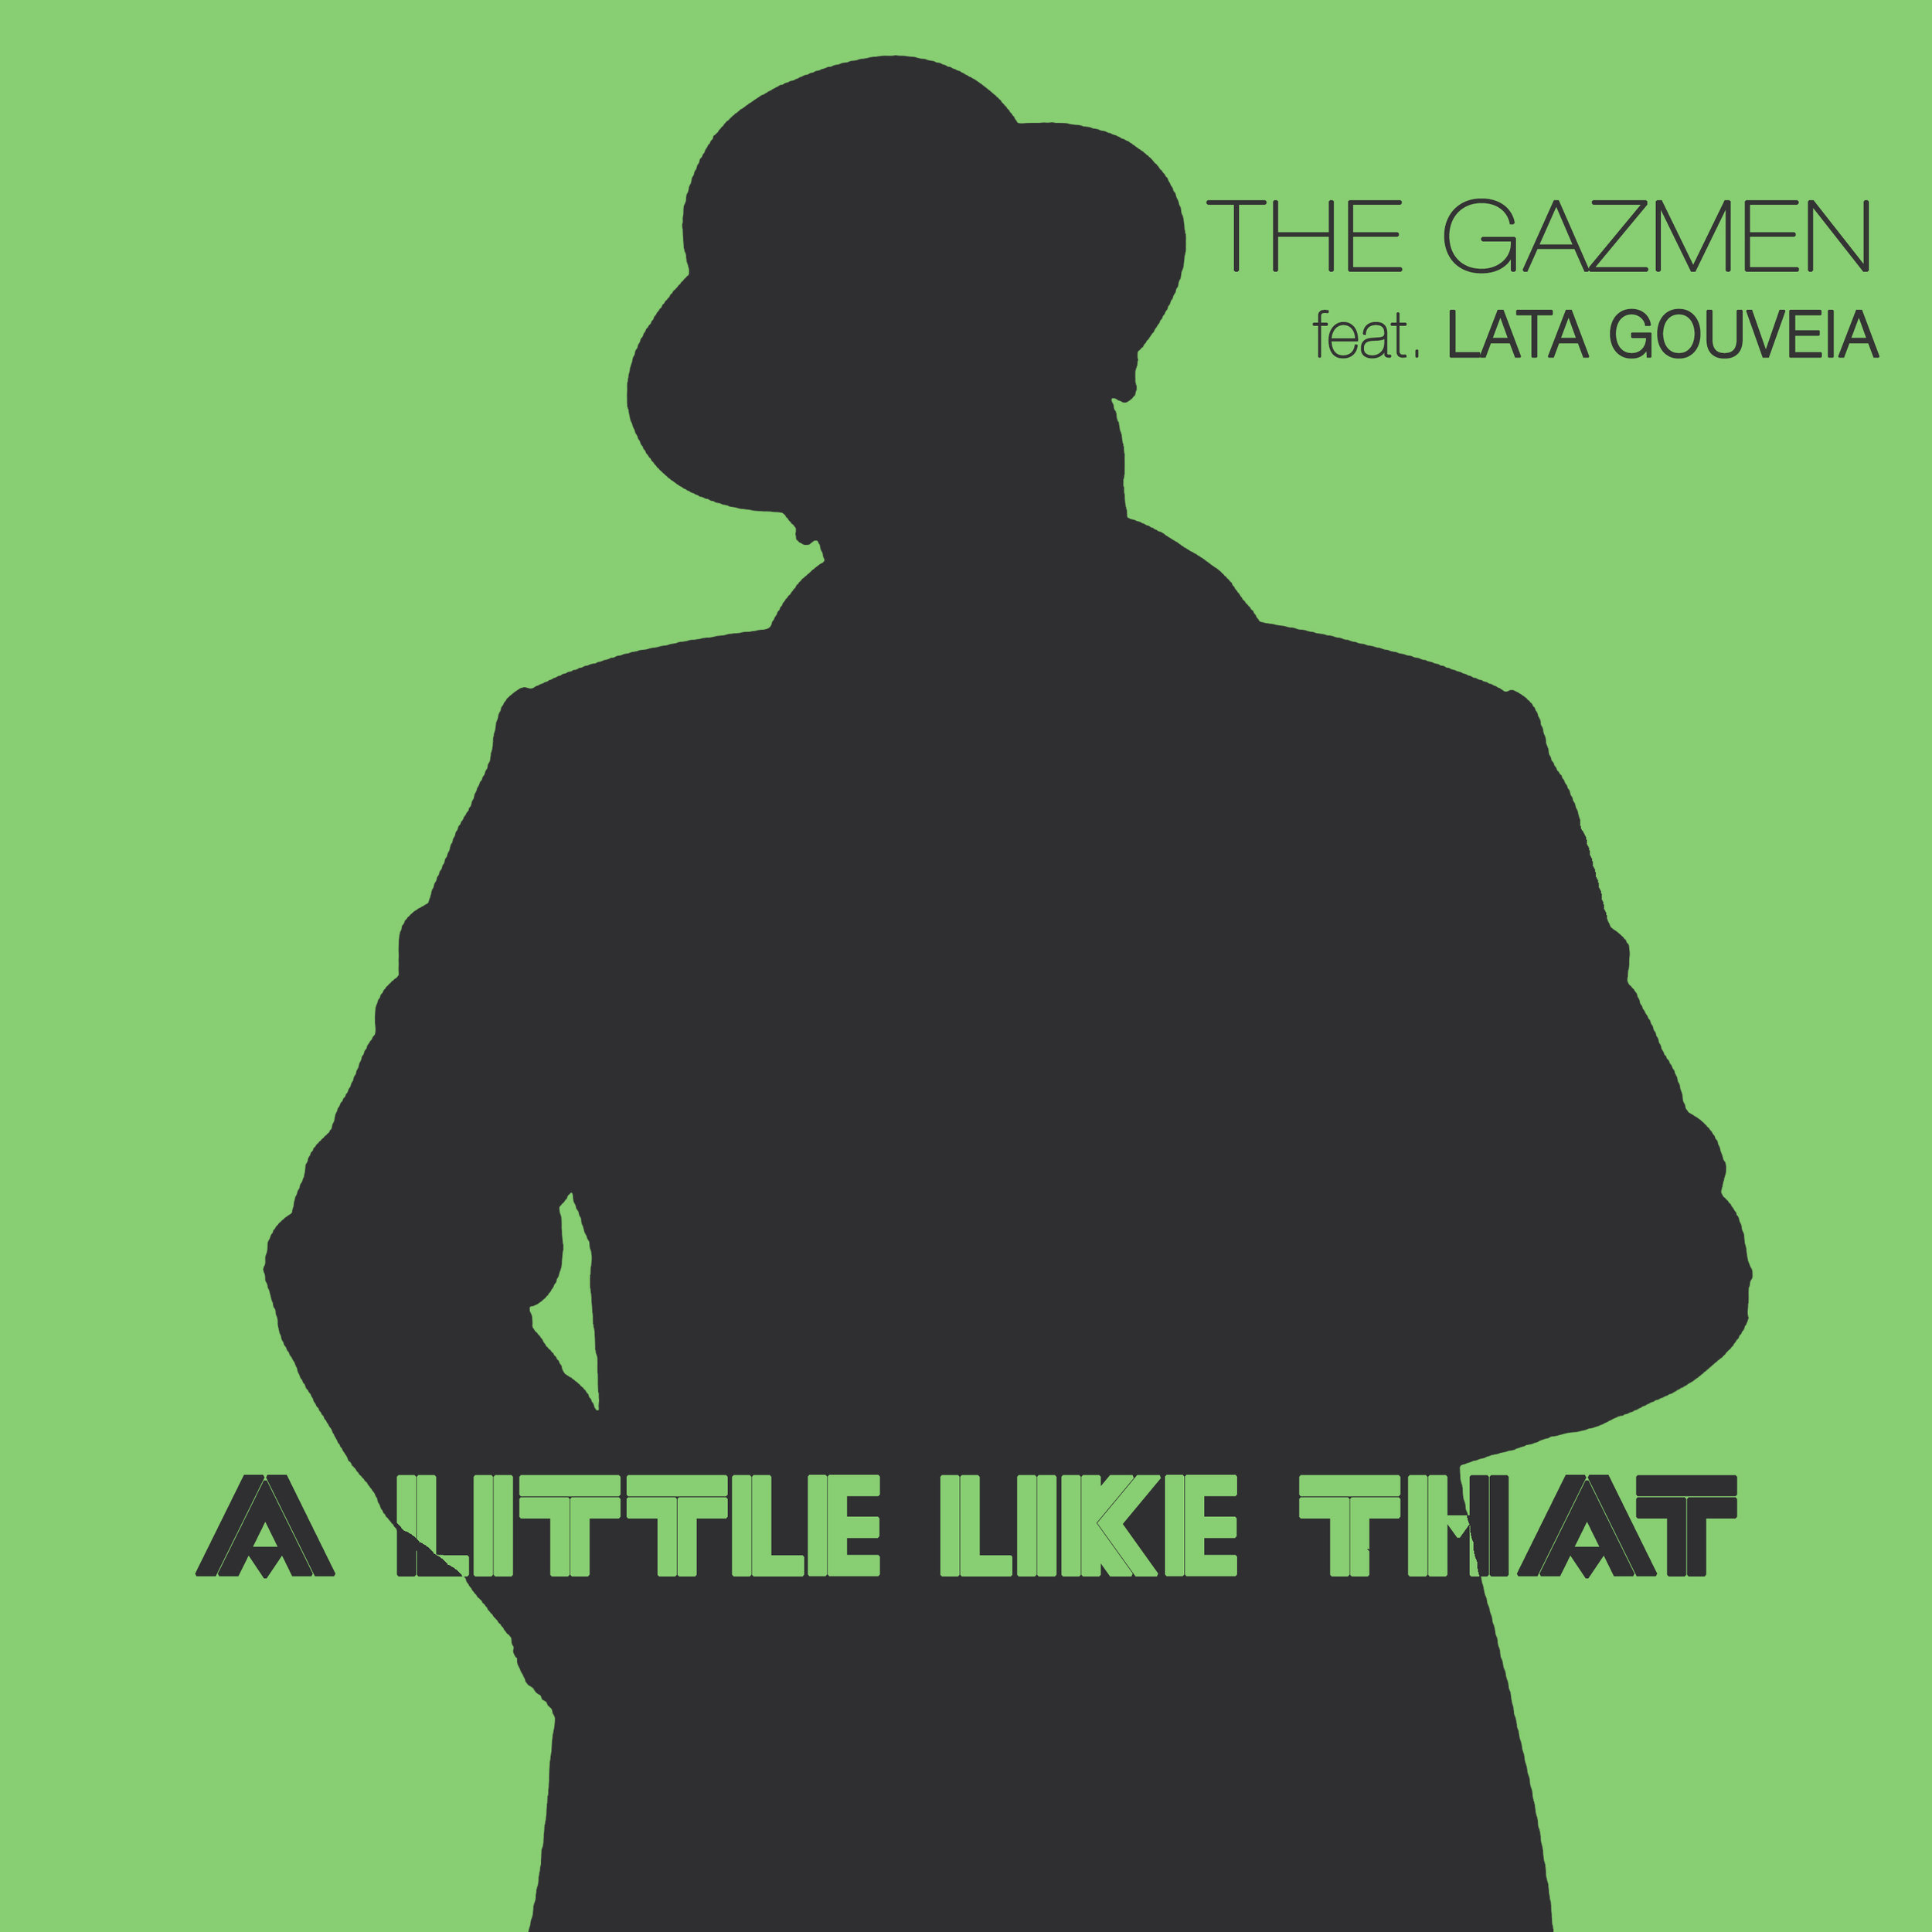 The Gazmen feat. Lata Gouveia - A Iittle like that.jpg